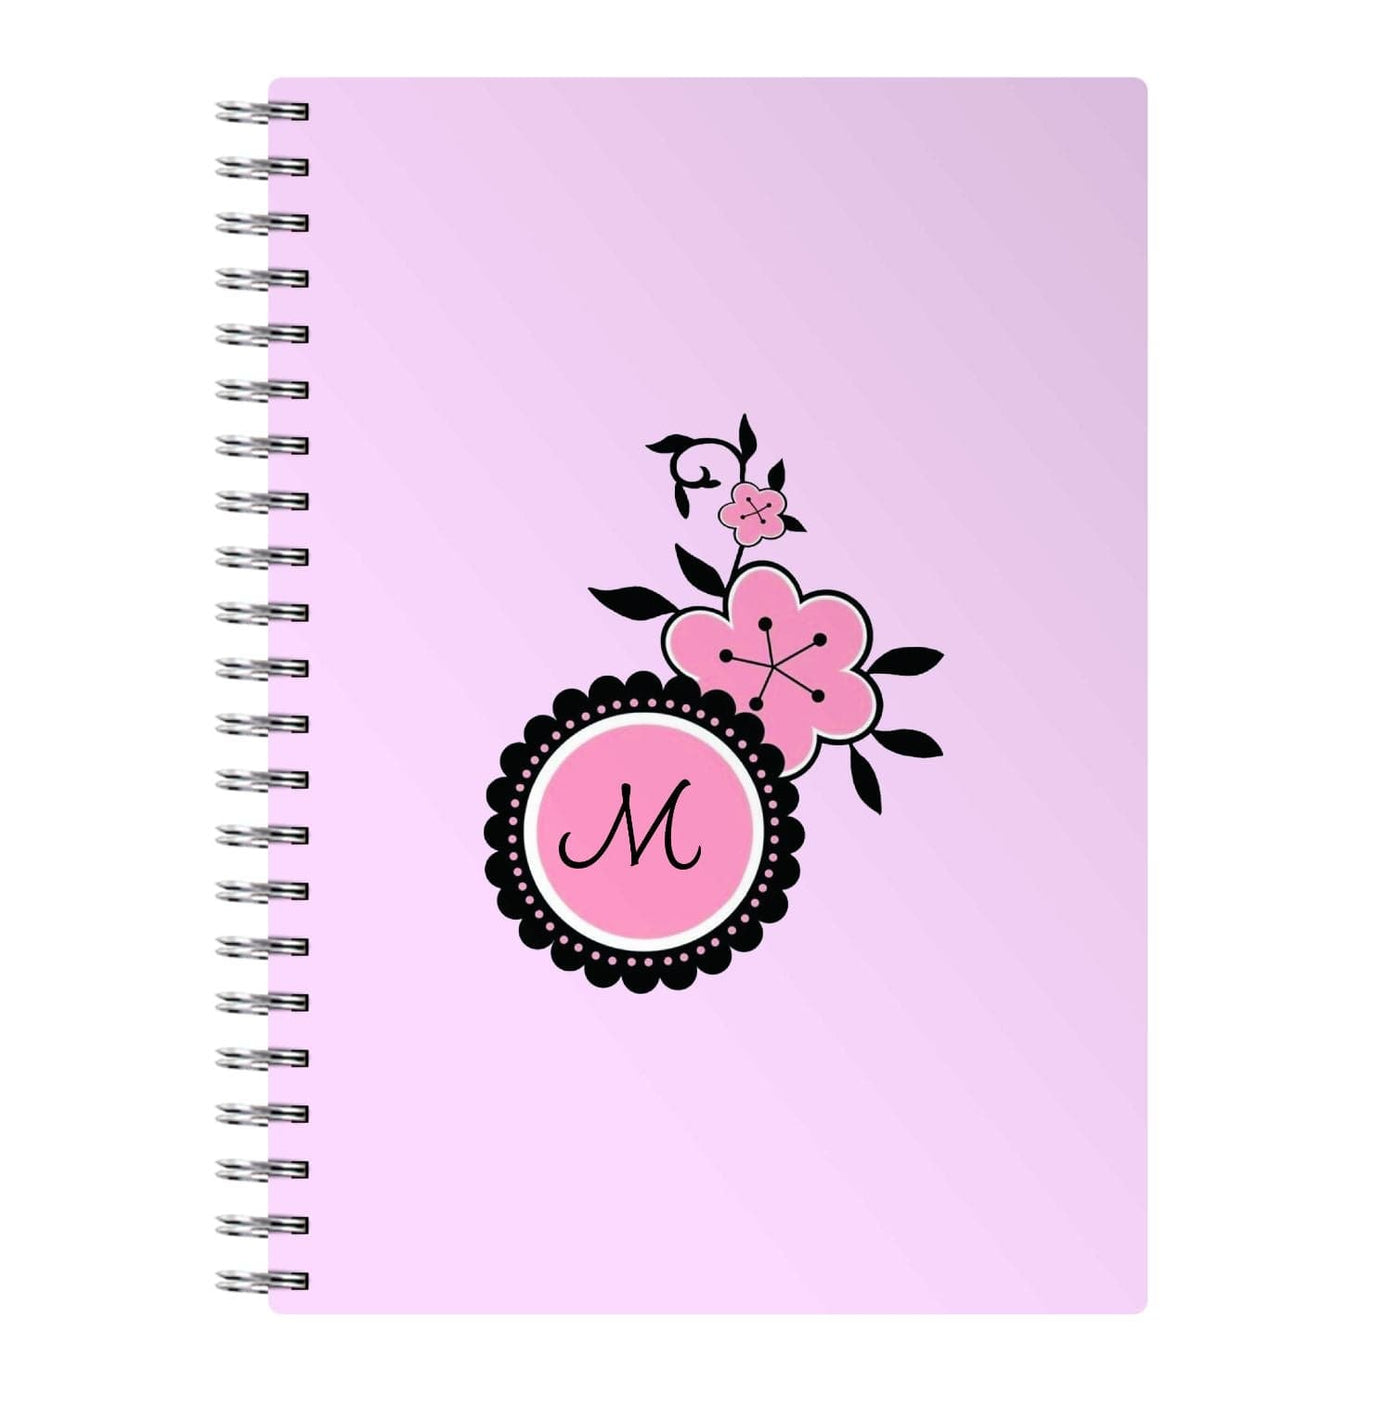 Marinette - Miraculous Notebook